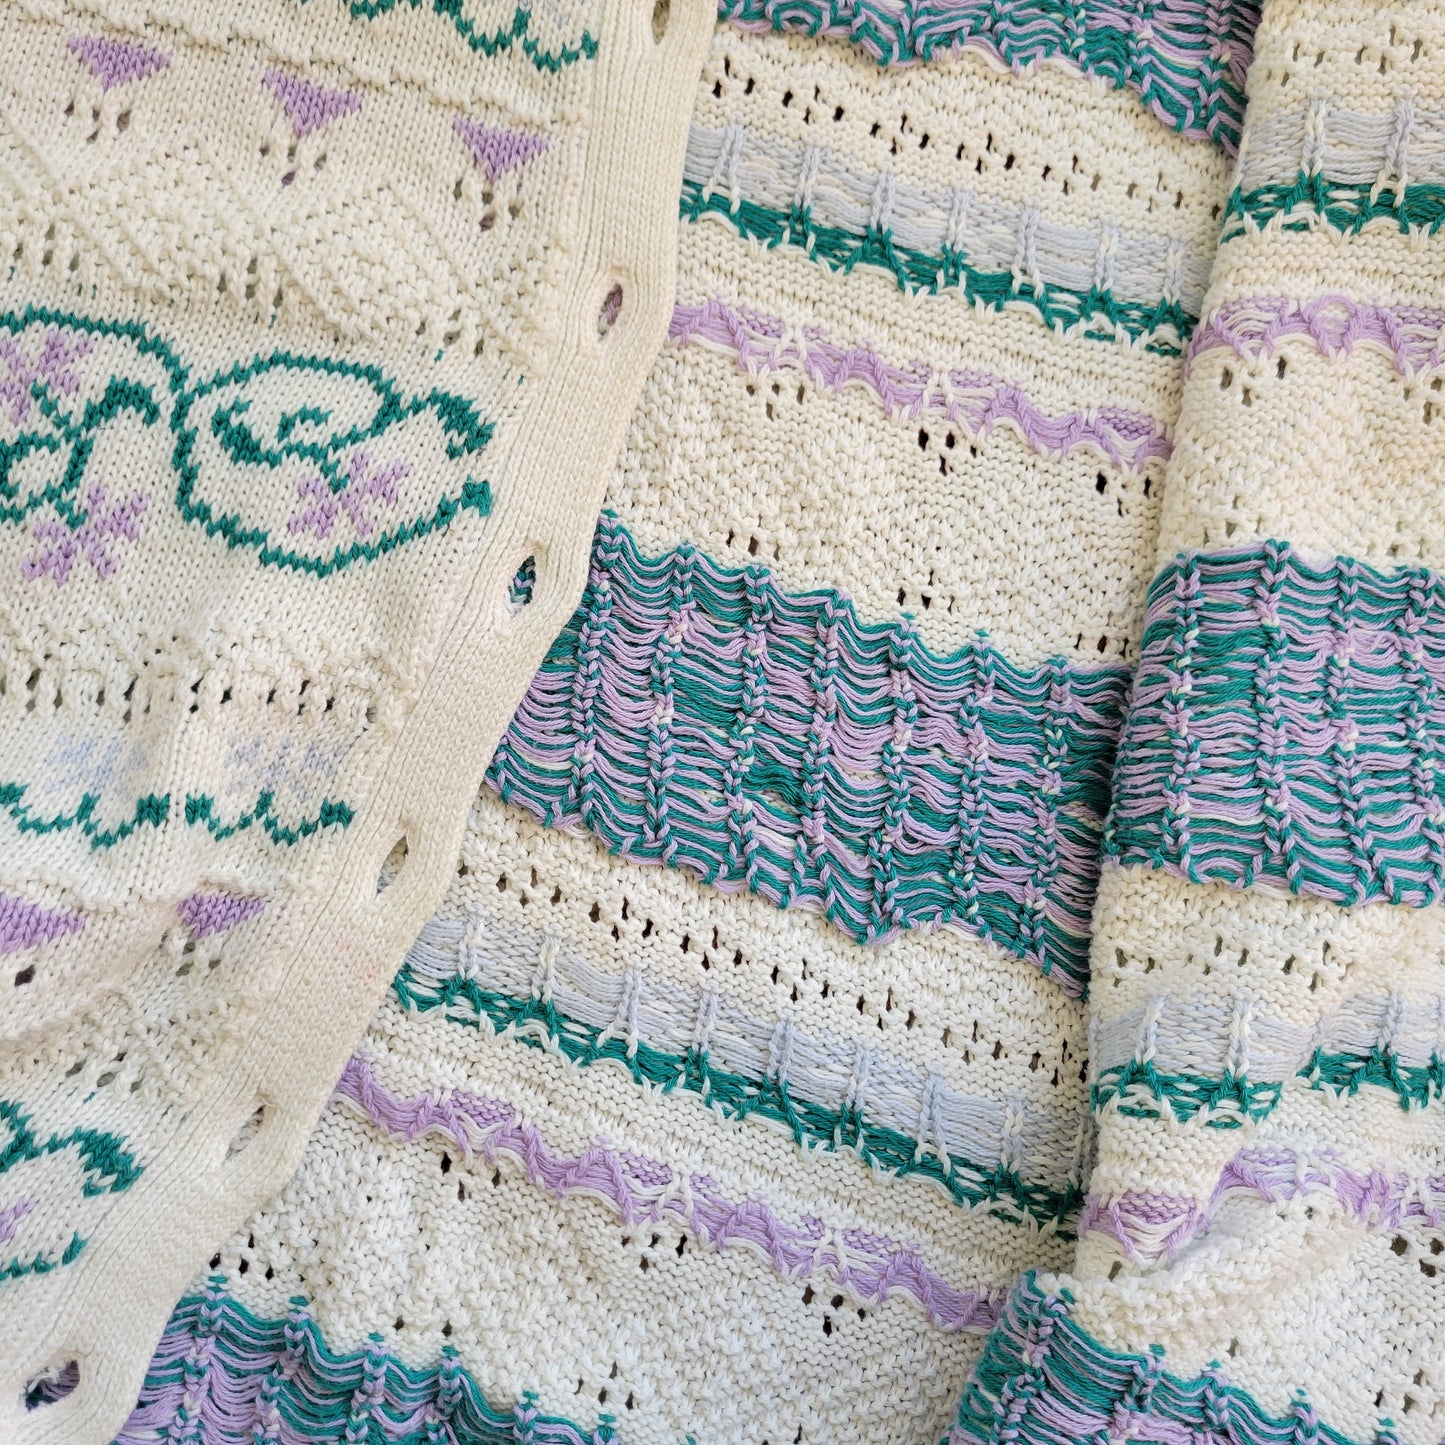 Vintage Authentic Blarney Wollen Mills of Ireland Hand Knit Cardigan - medium